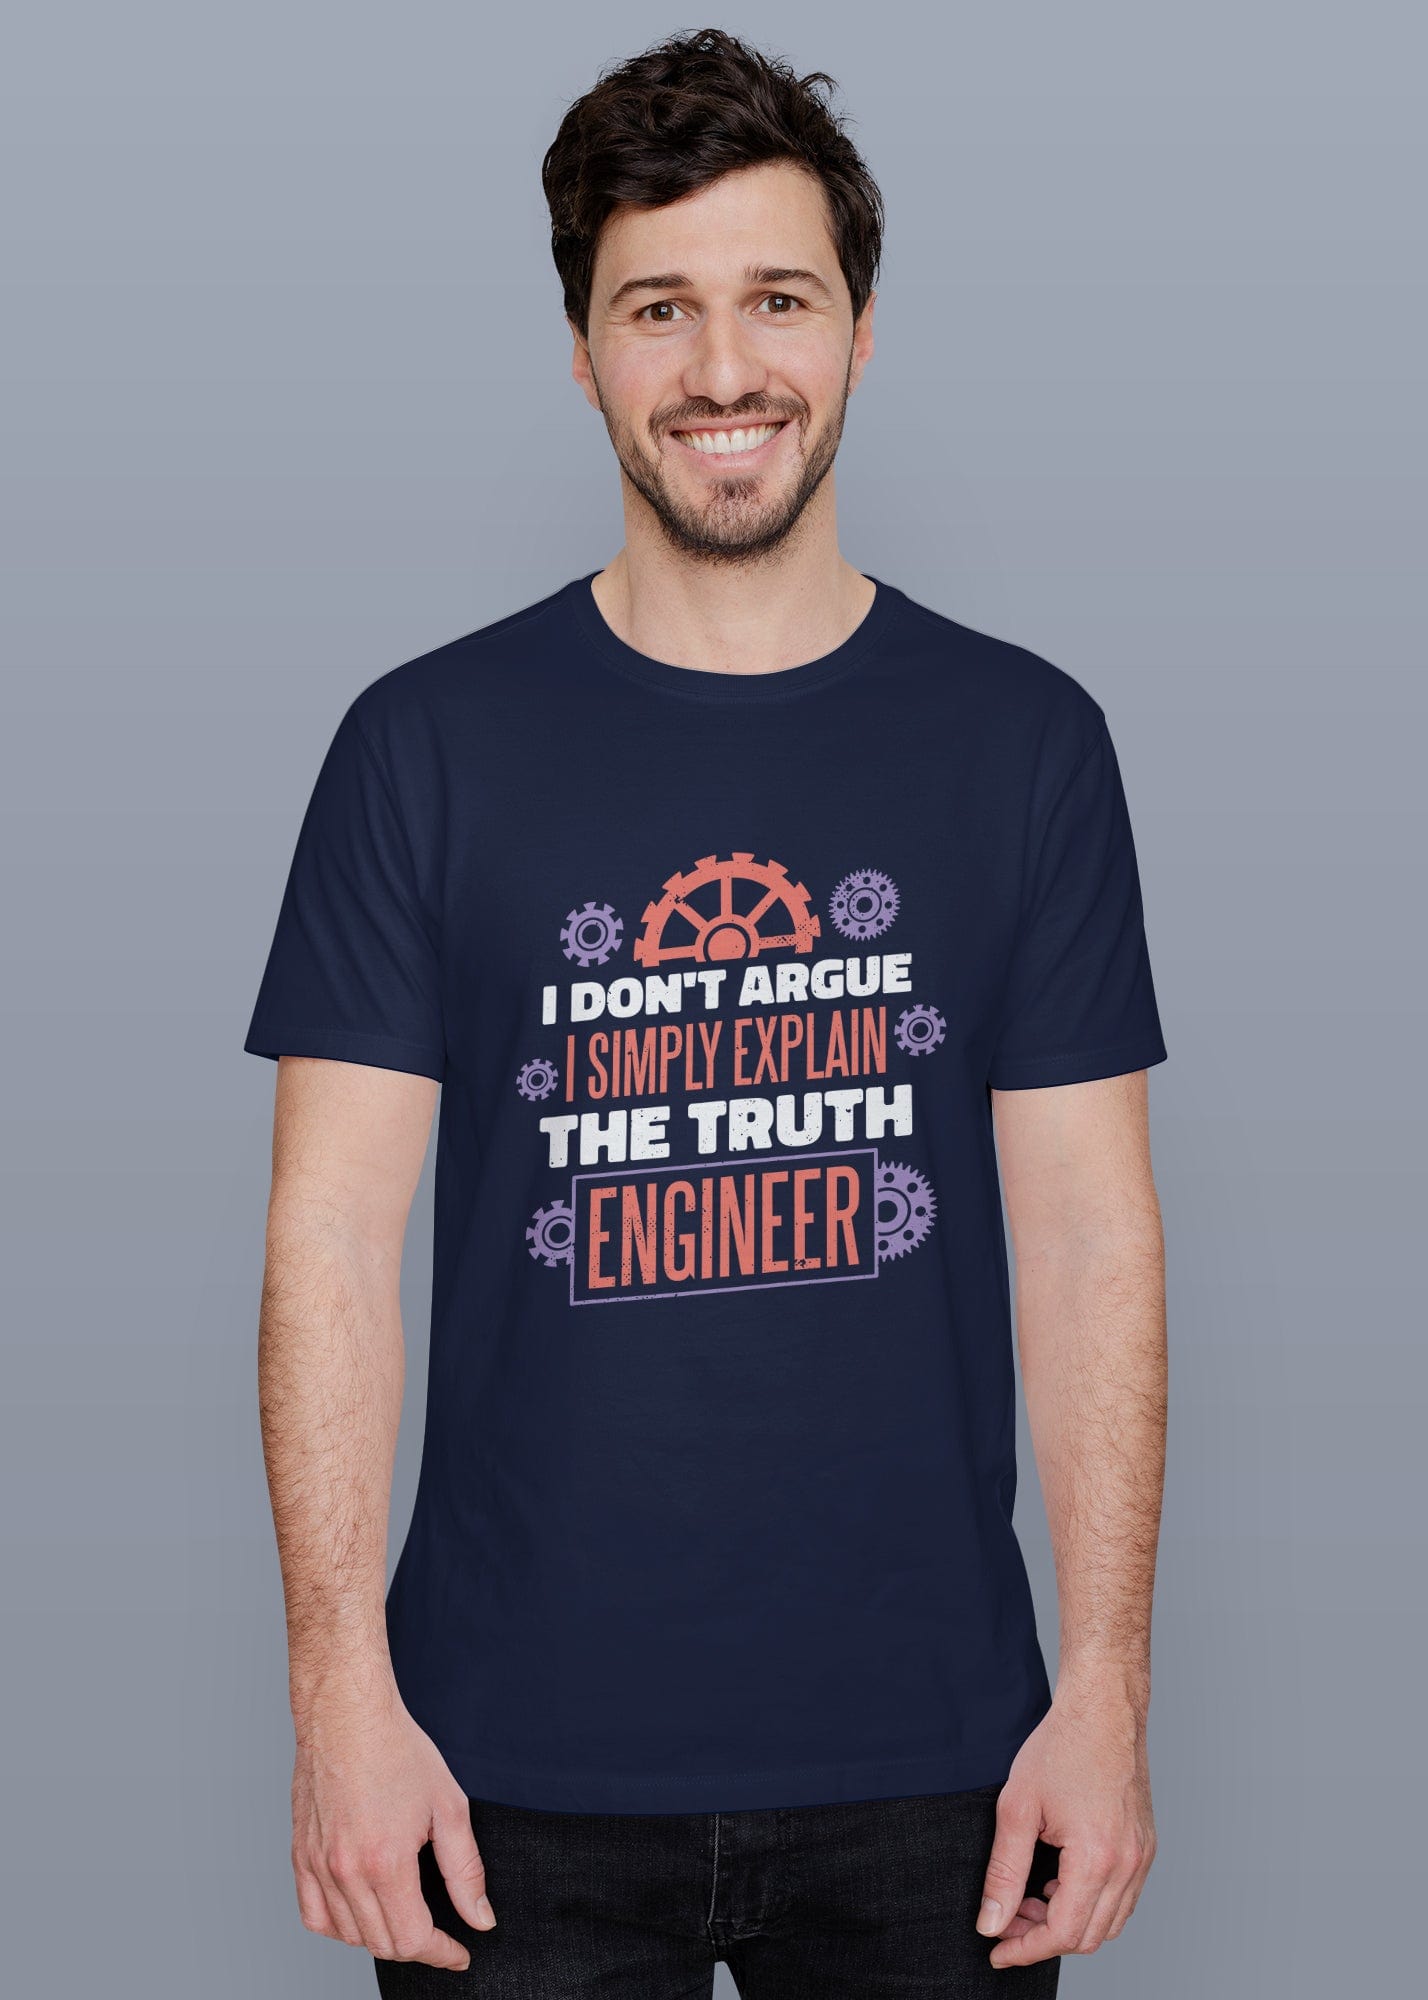 Engineer Quote Printed Half Sleeve Premium Cotton T-shirt For Men